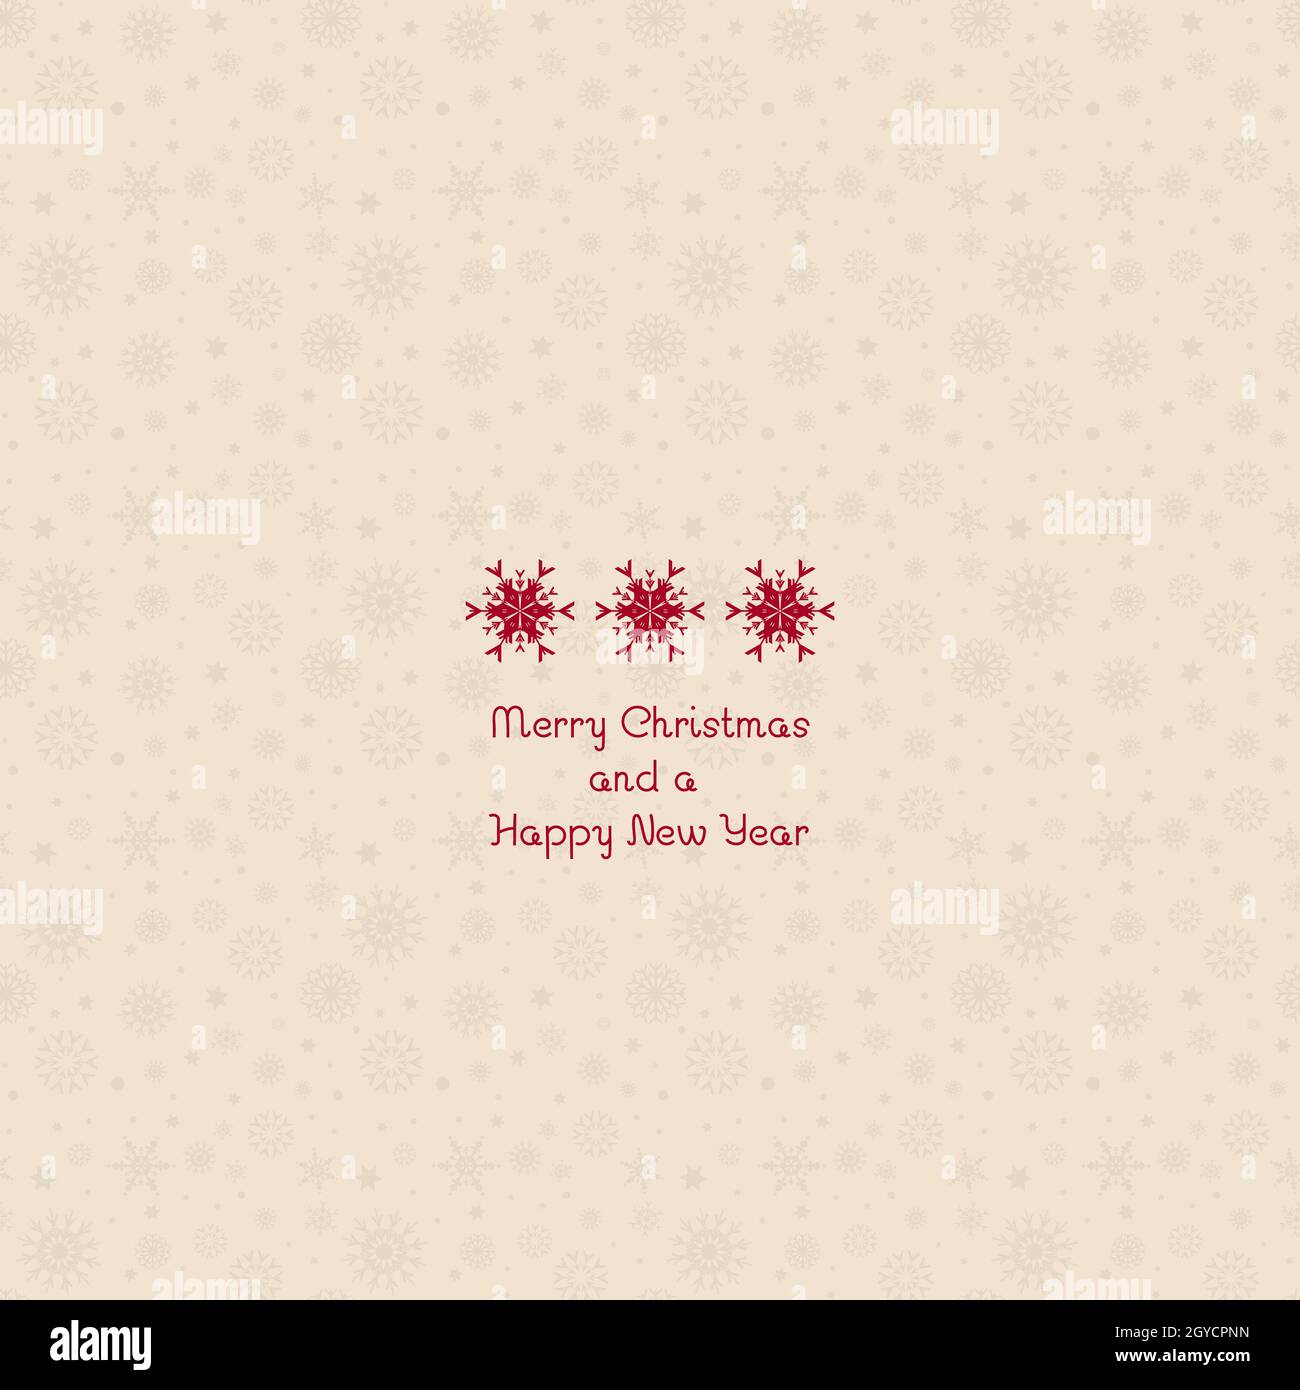 Simplistic Christmas background with snowflake design Stock Photo